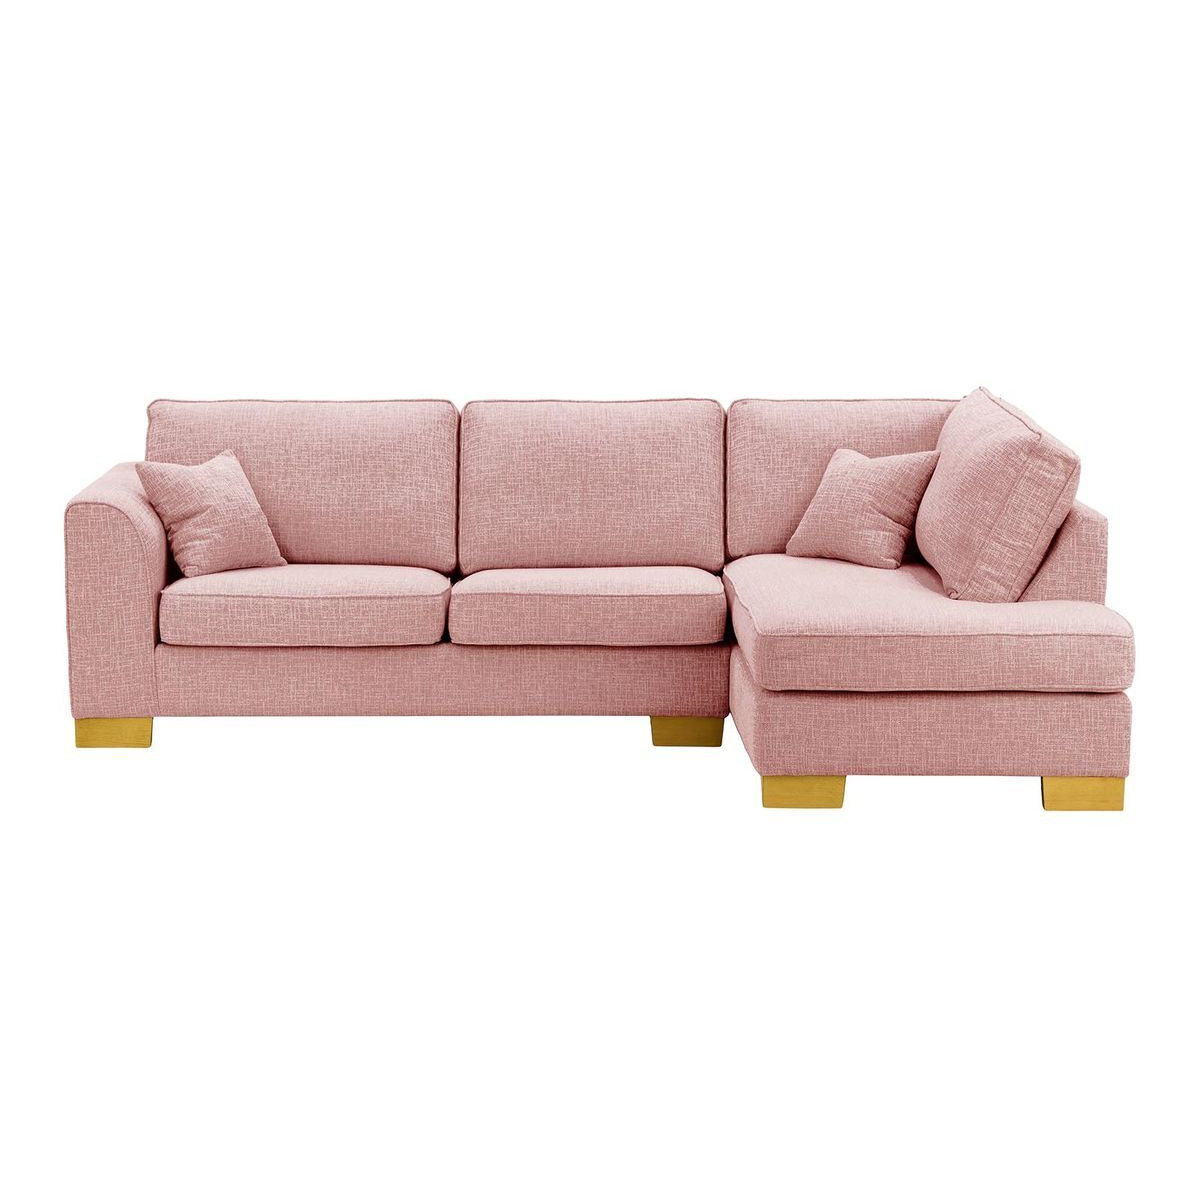 Avos Right Hand Corner Sofa Bed, blush pink, Leg colour: like oak - image 1